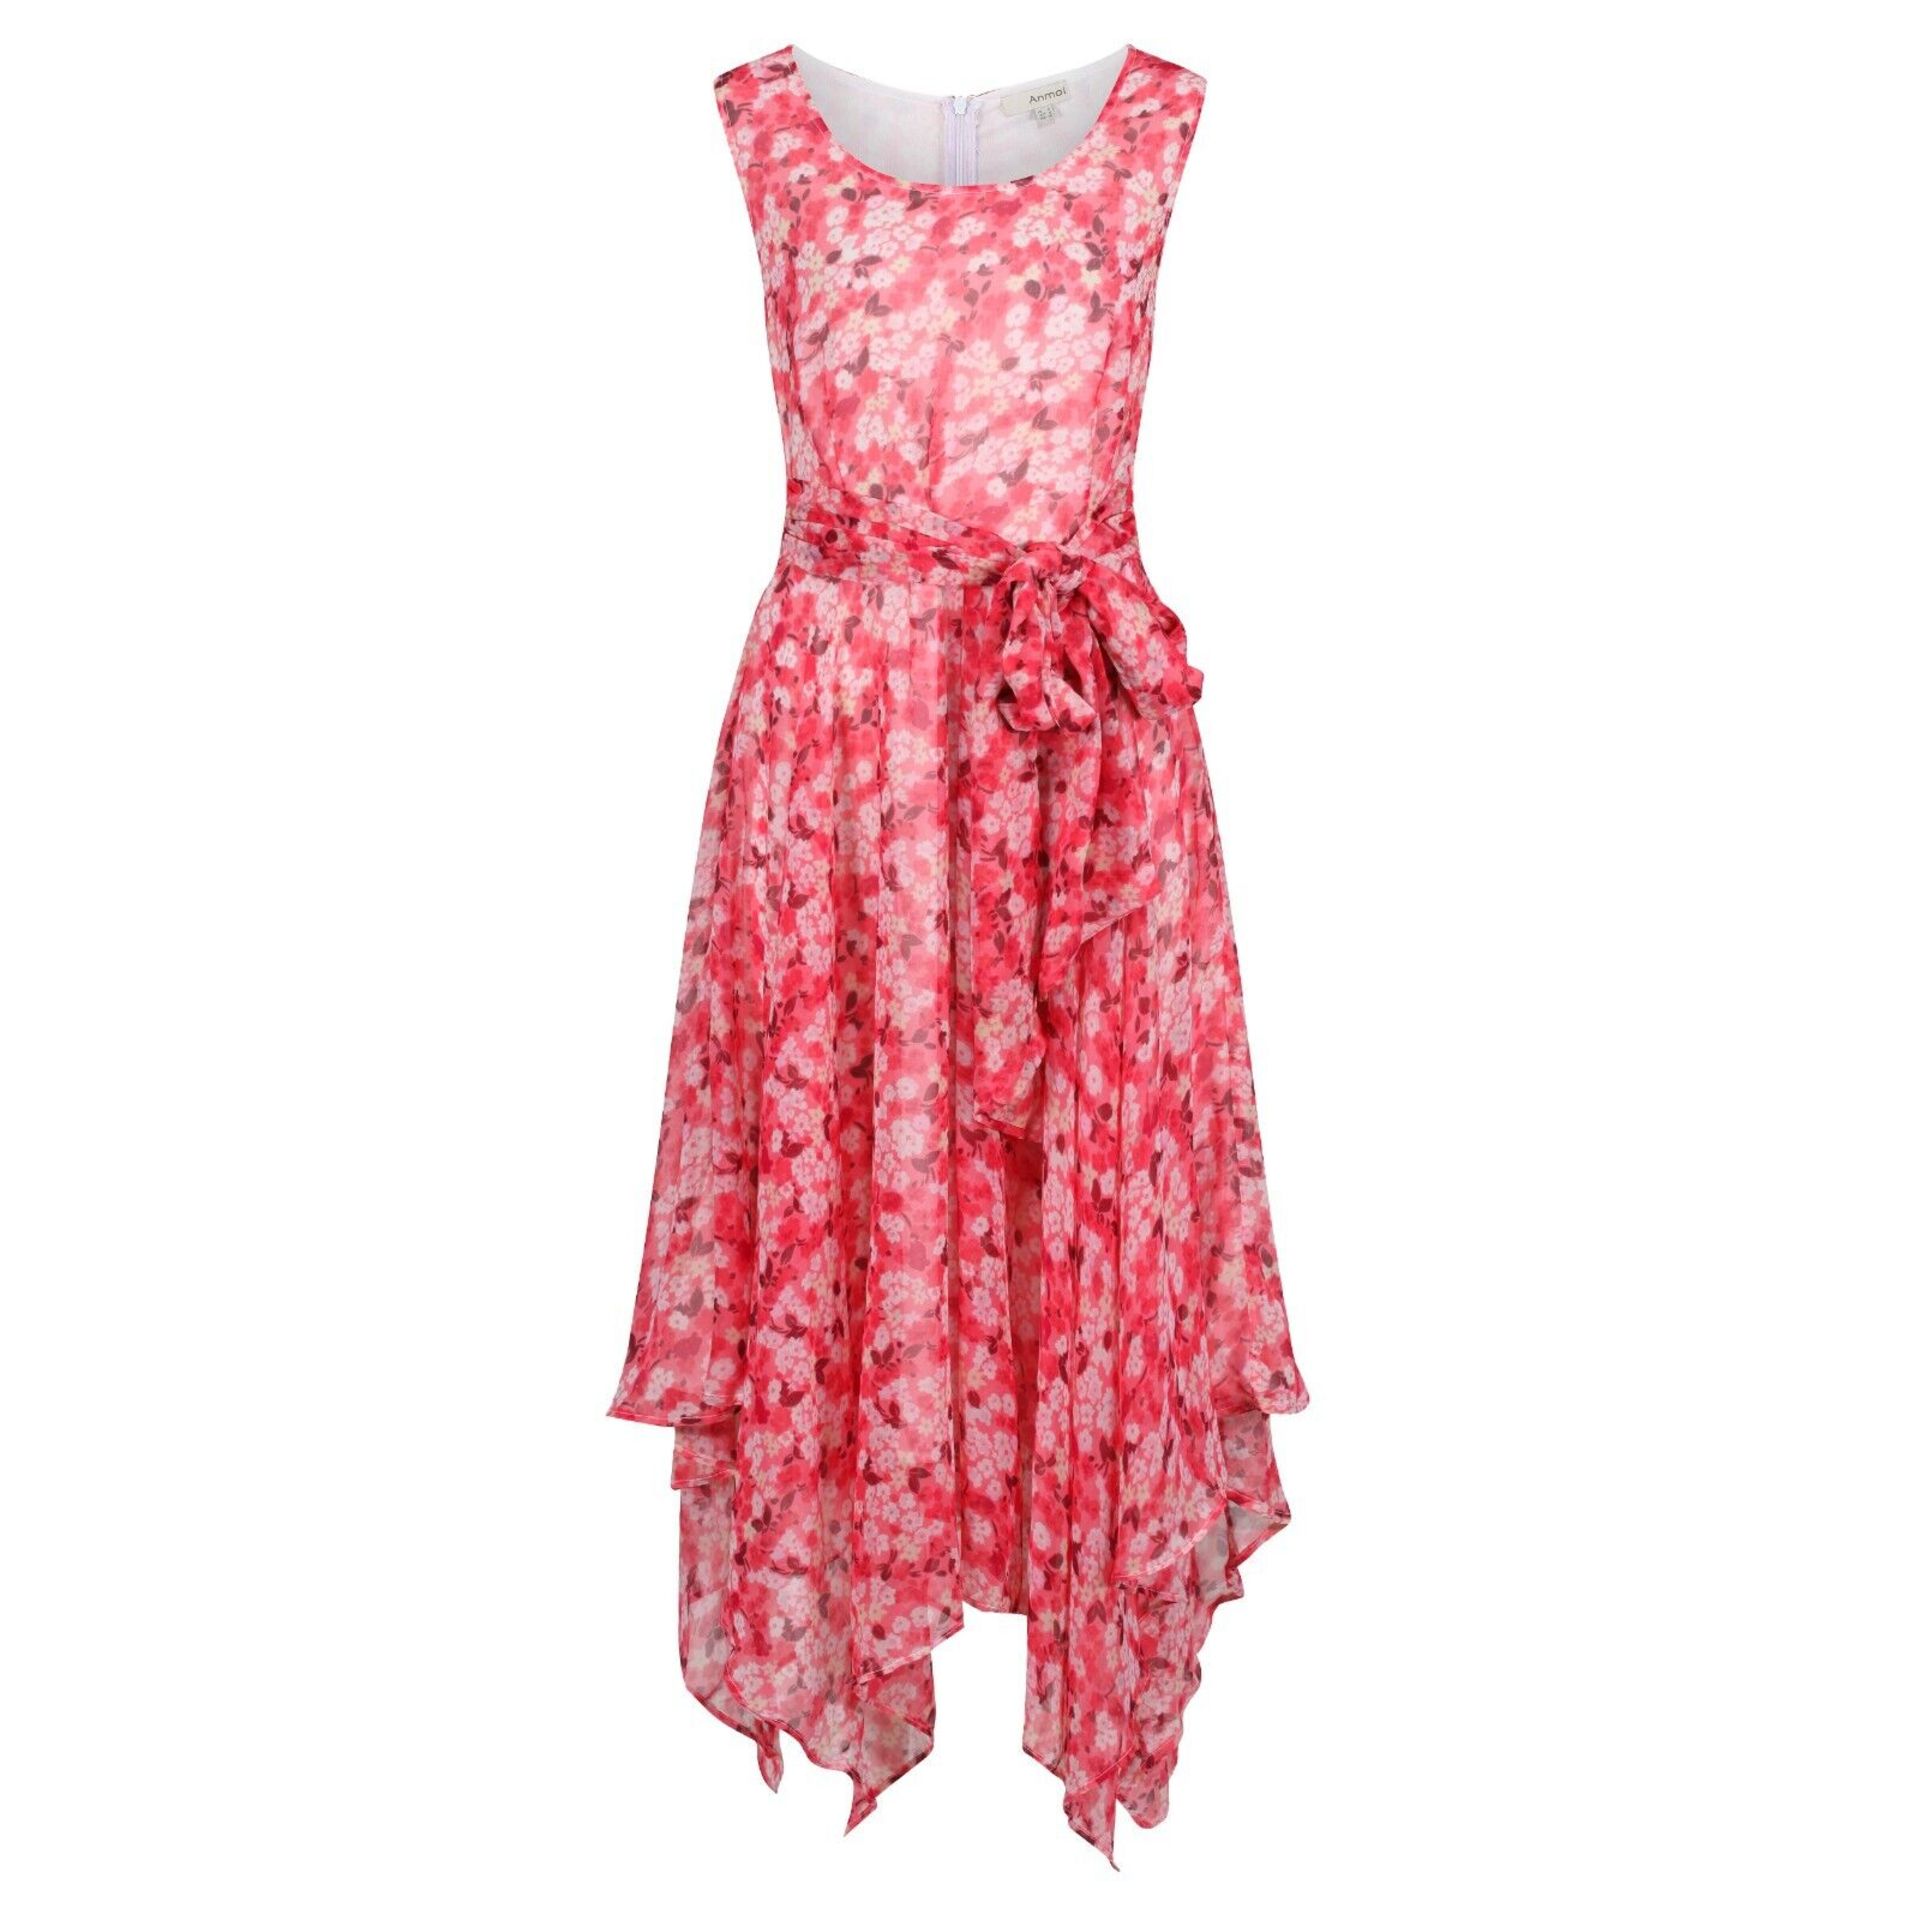 20 x New Women's Maxi & Midi Dresses Clothing Ladieswear Fashion Boho Spring / Summer Styles - Image 2 of 11